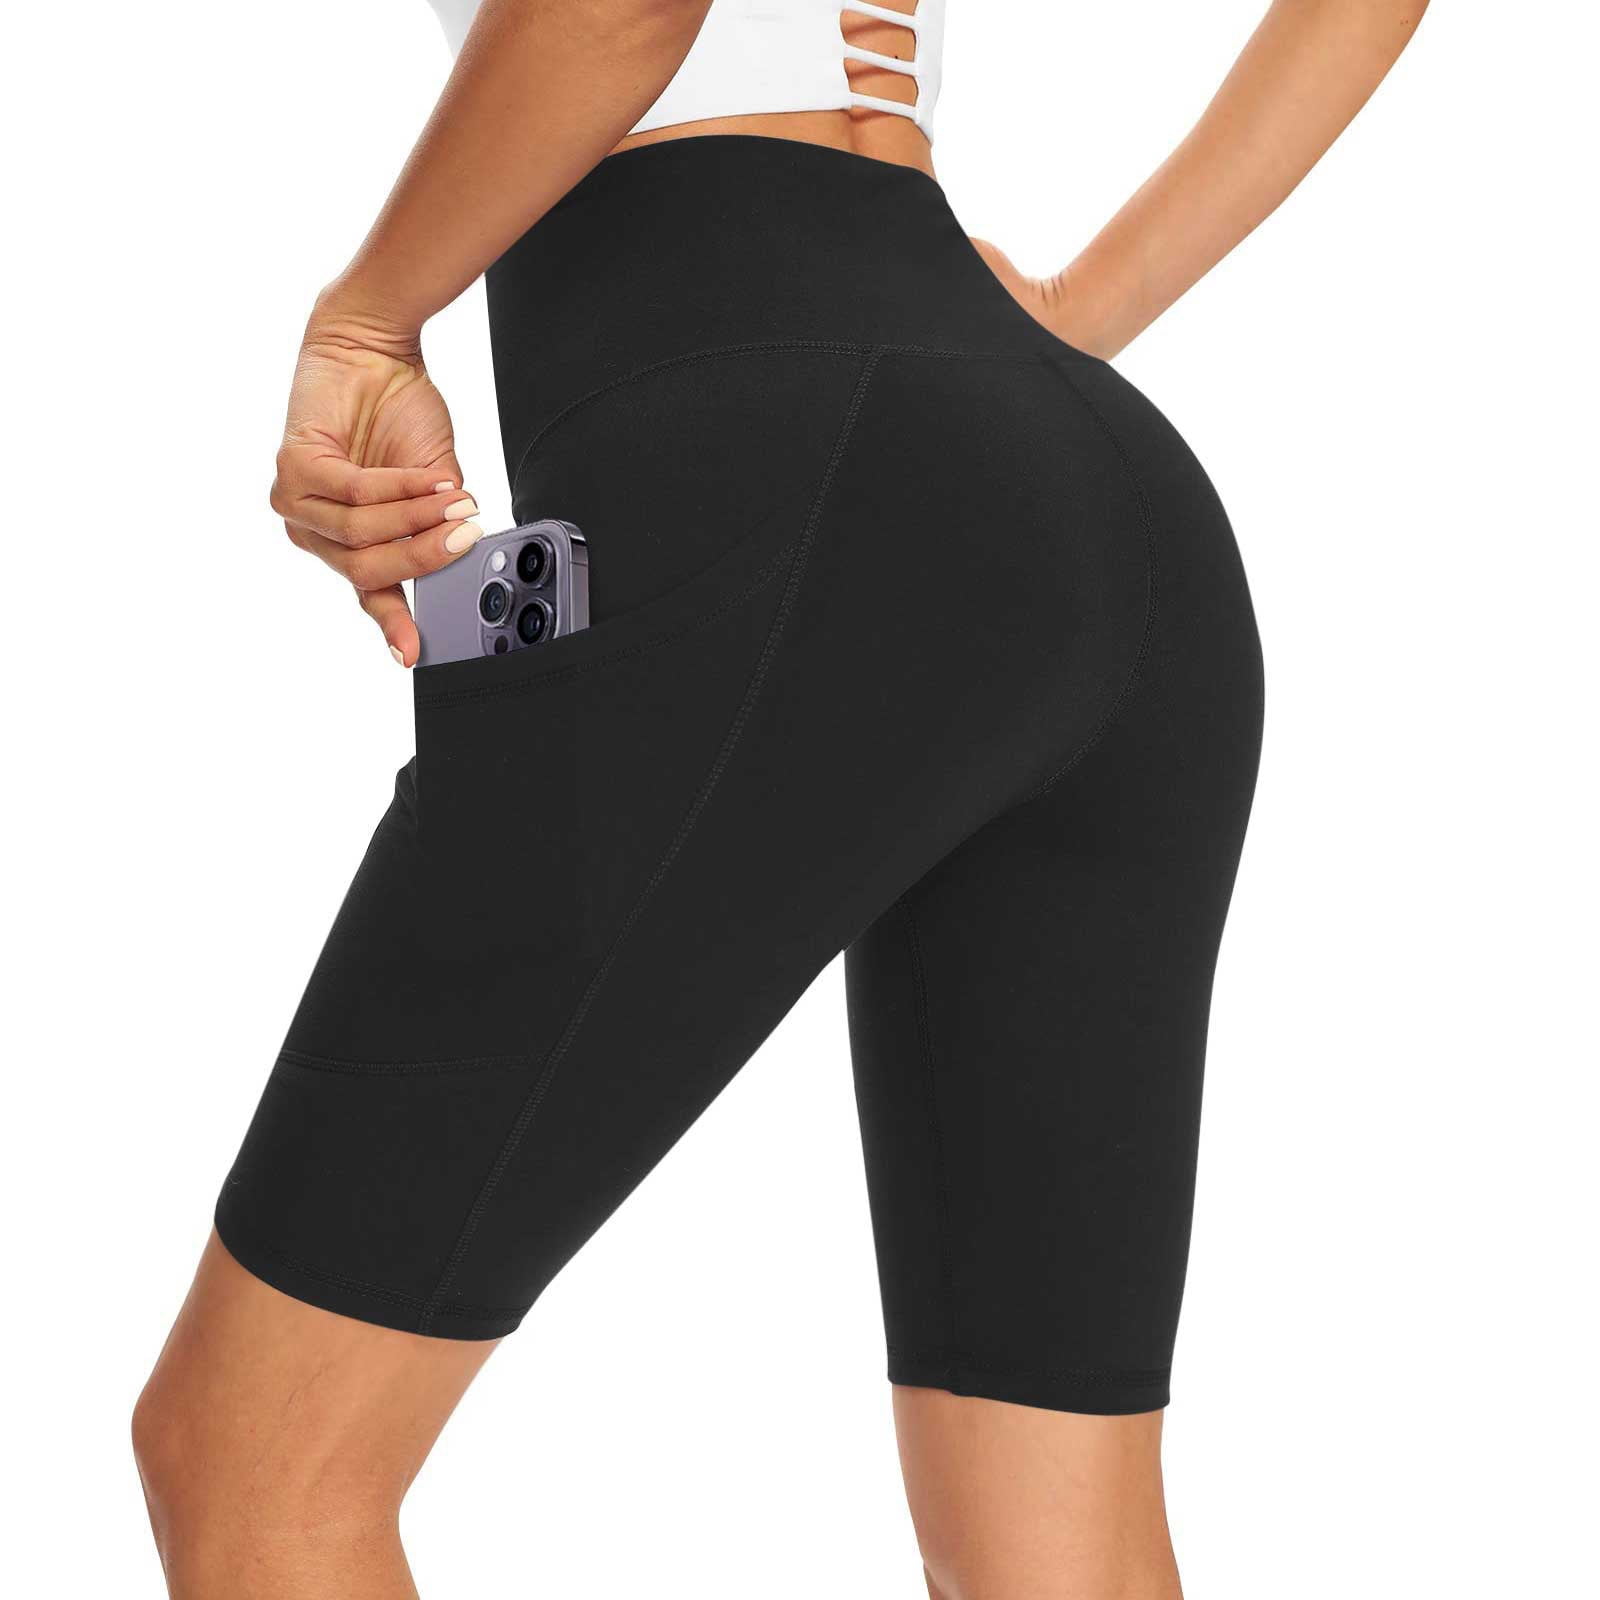 ZQGJB Yoga Shorts for Women High Wasit Tummy Control Skinny Biker